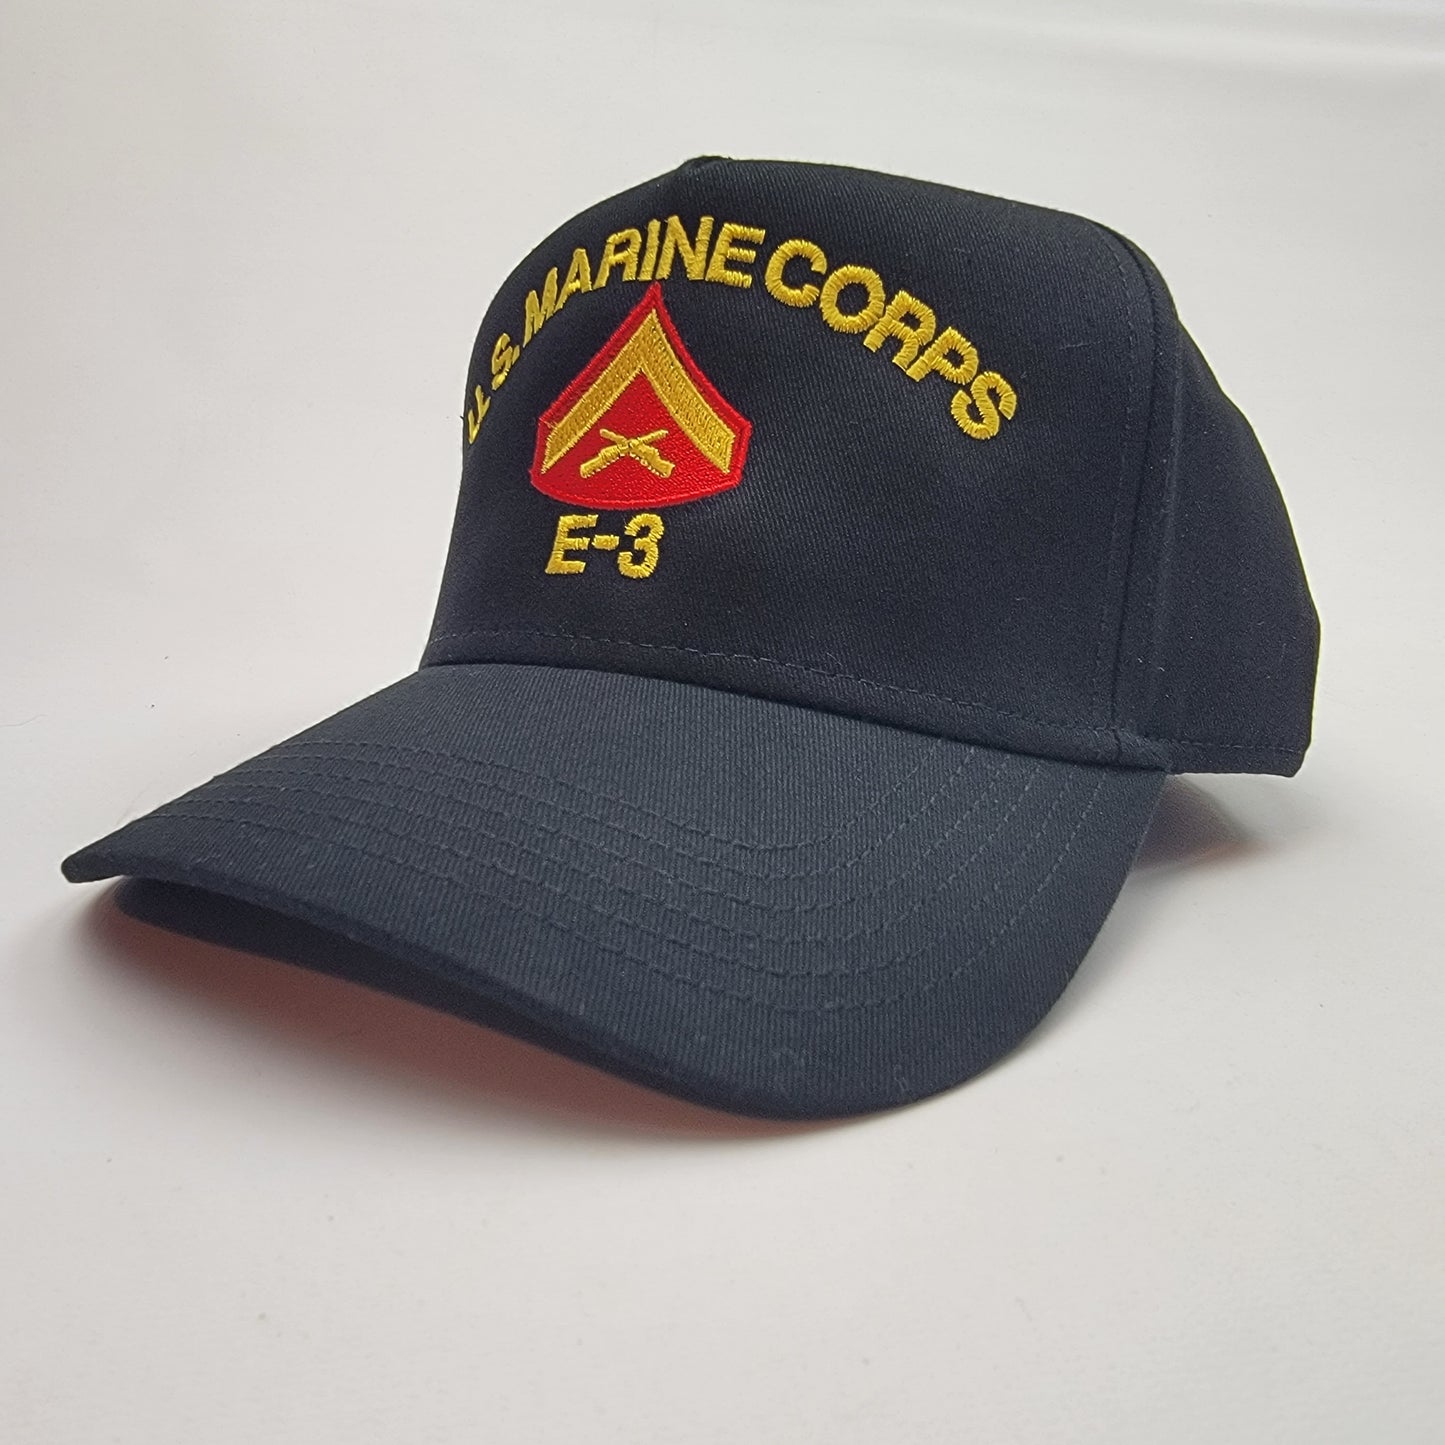 Lance Corporal E-3 Insignia Rank Baseball Cap Hat Embroidered Military Marine Black Cotton Curved Bill Strapback